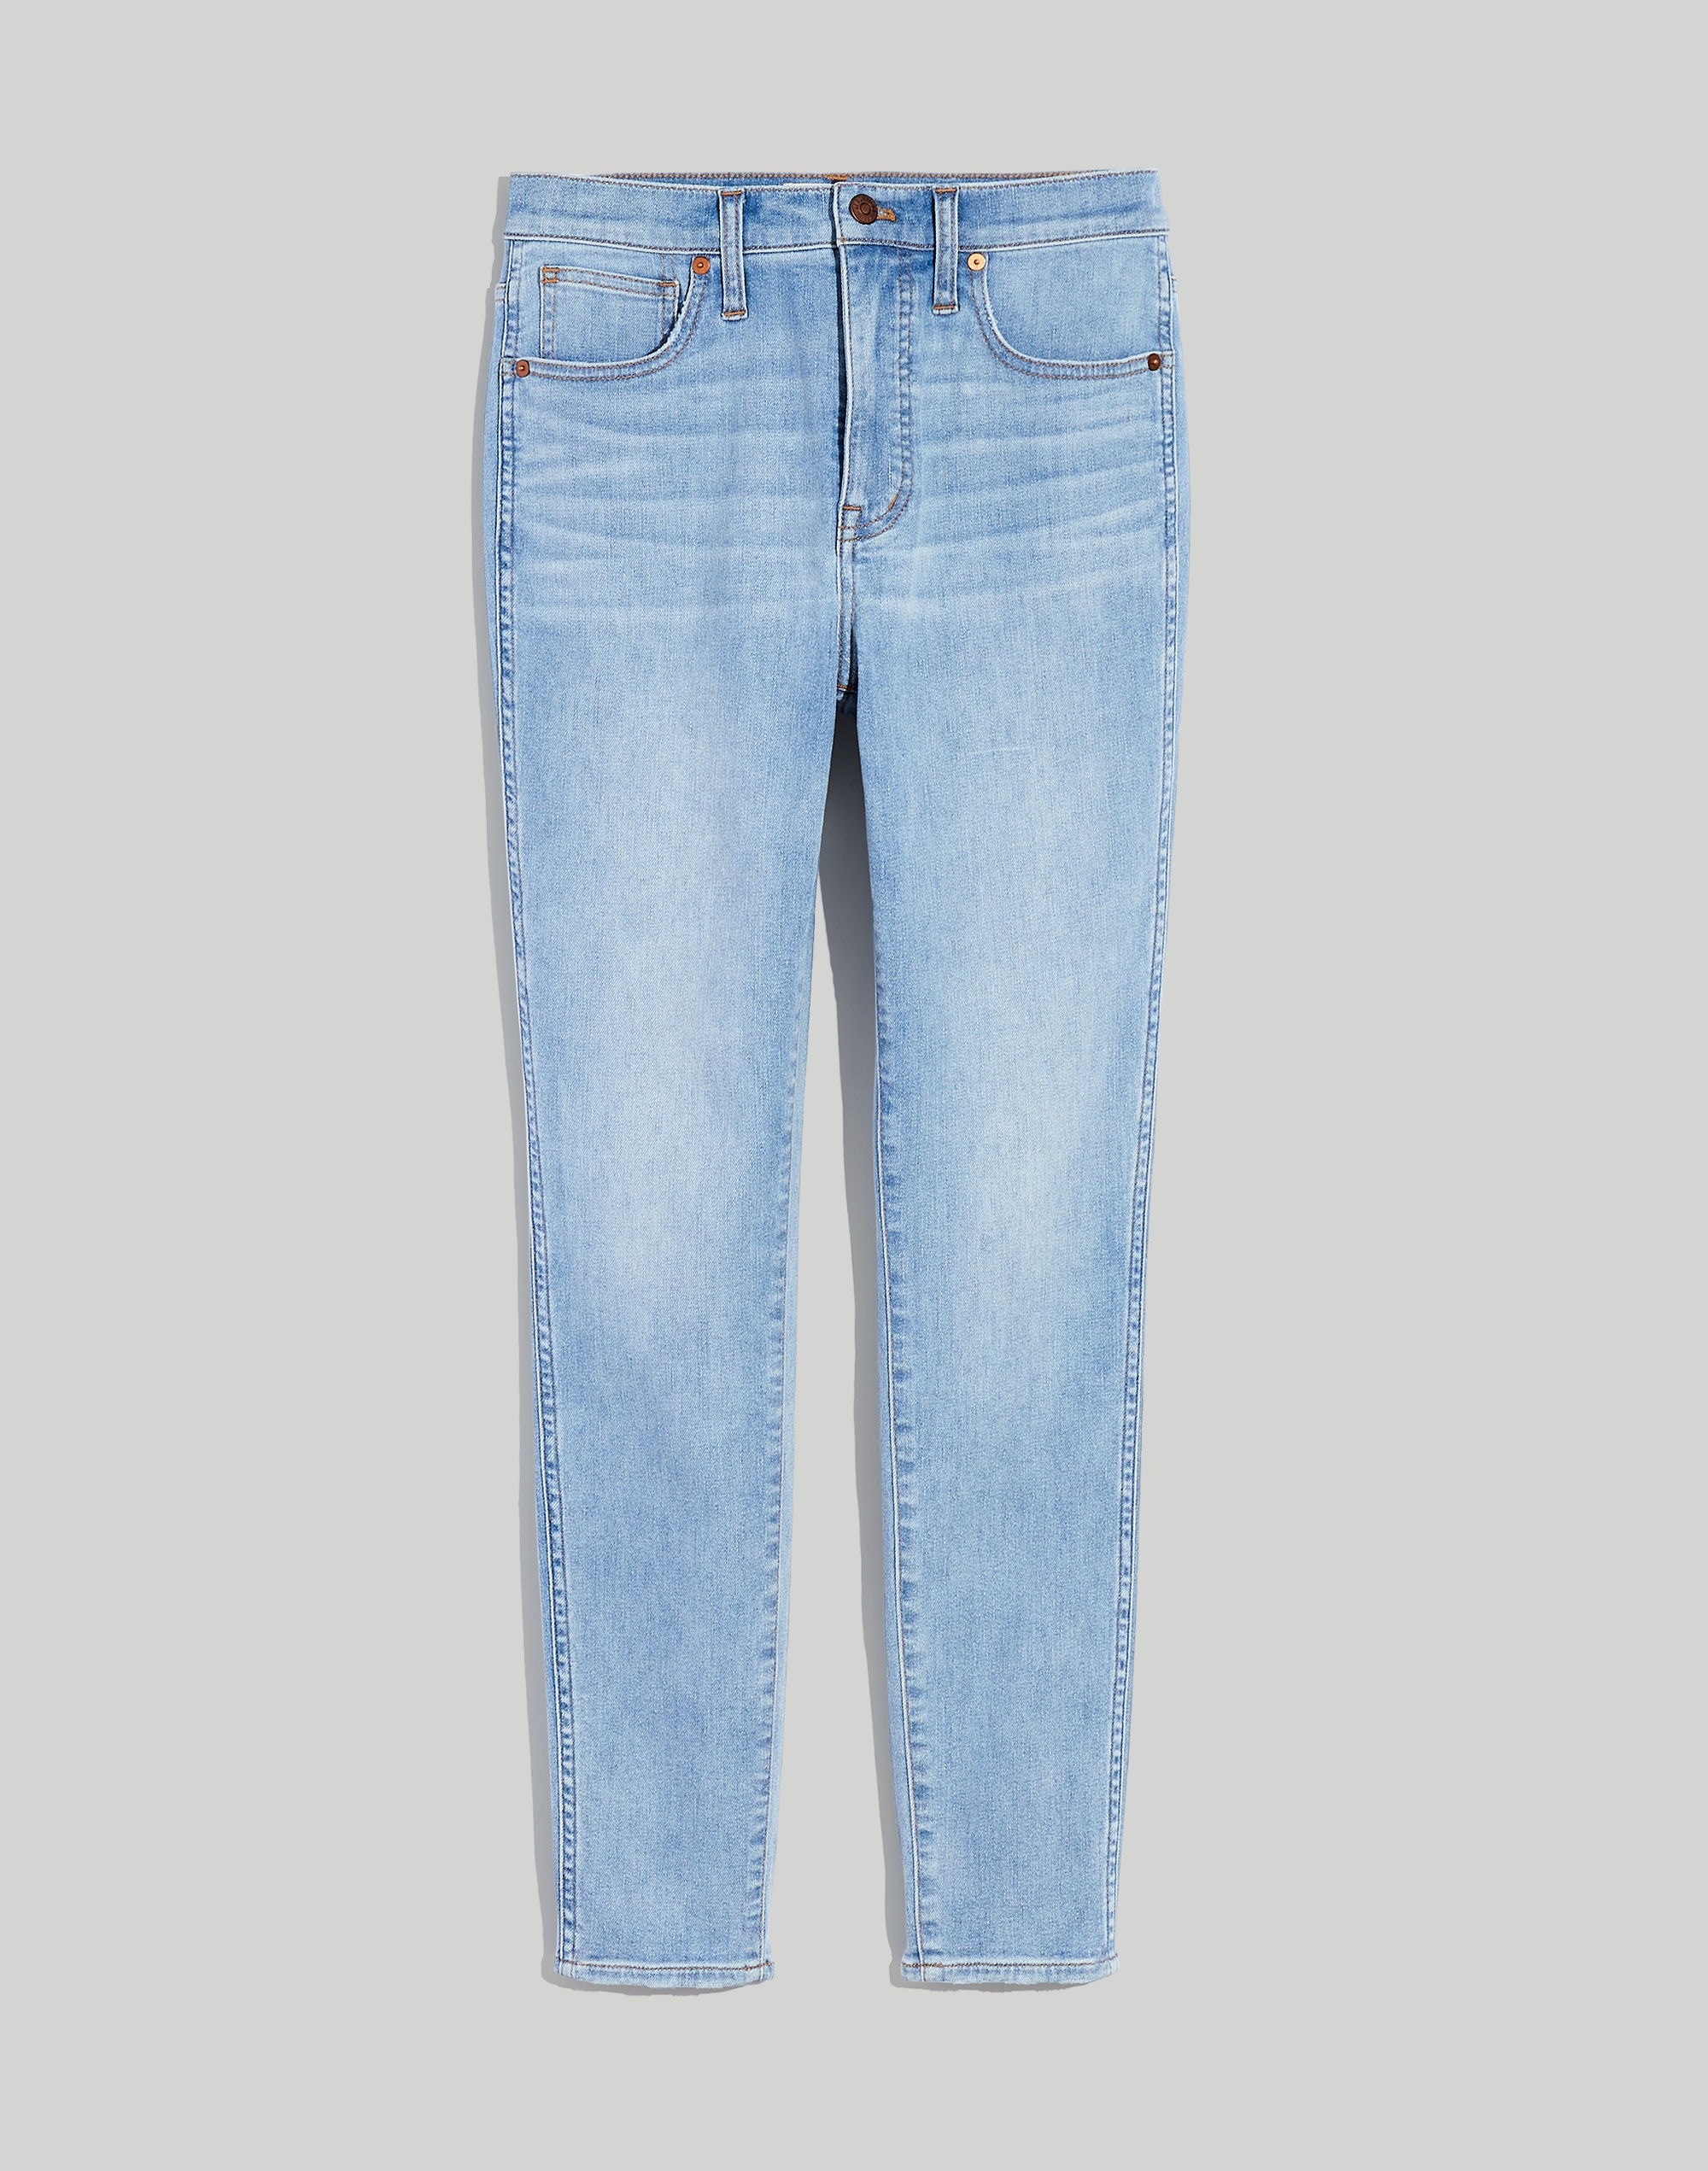 Plus High-Rise Skinny Crop Jeans in Carlton Wash